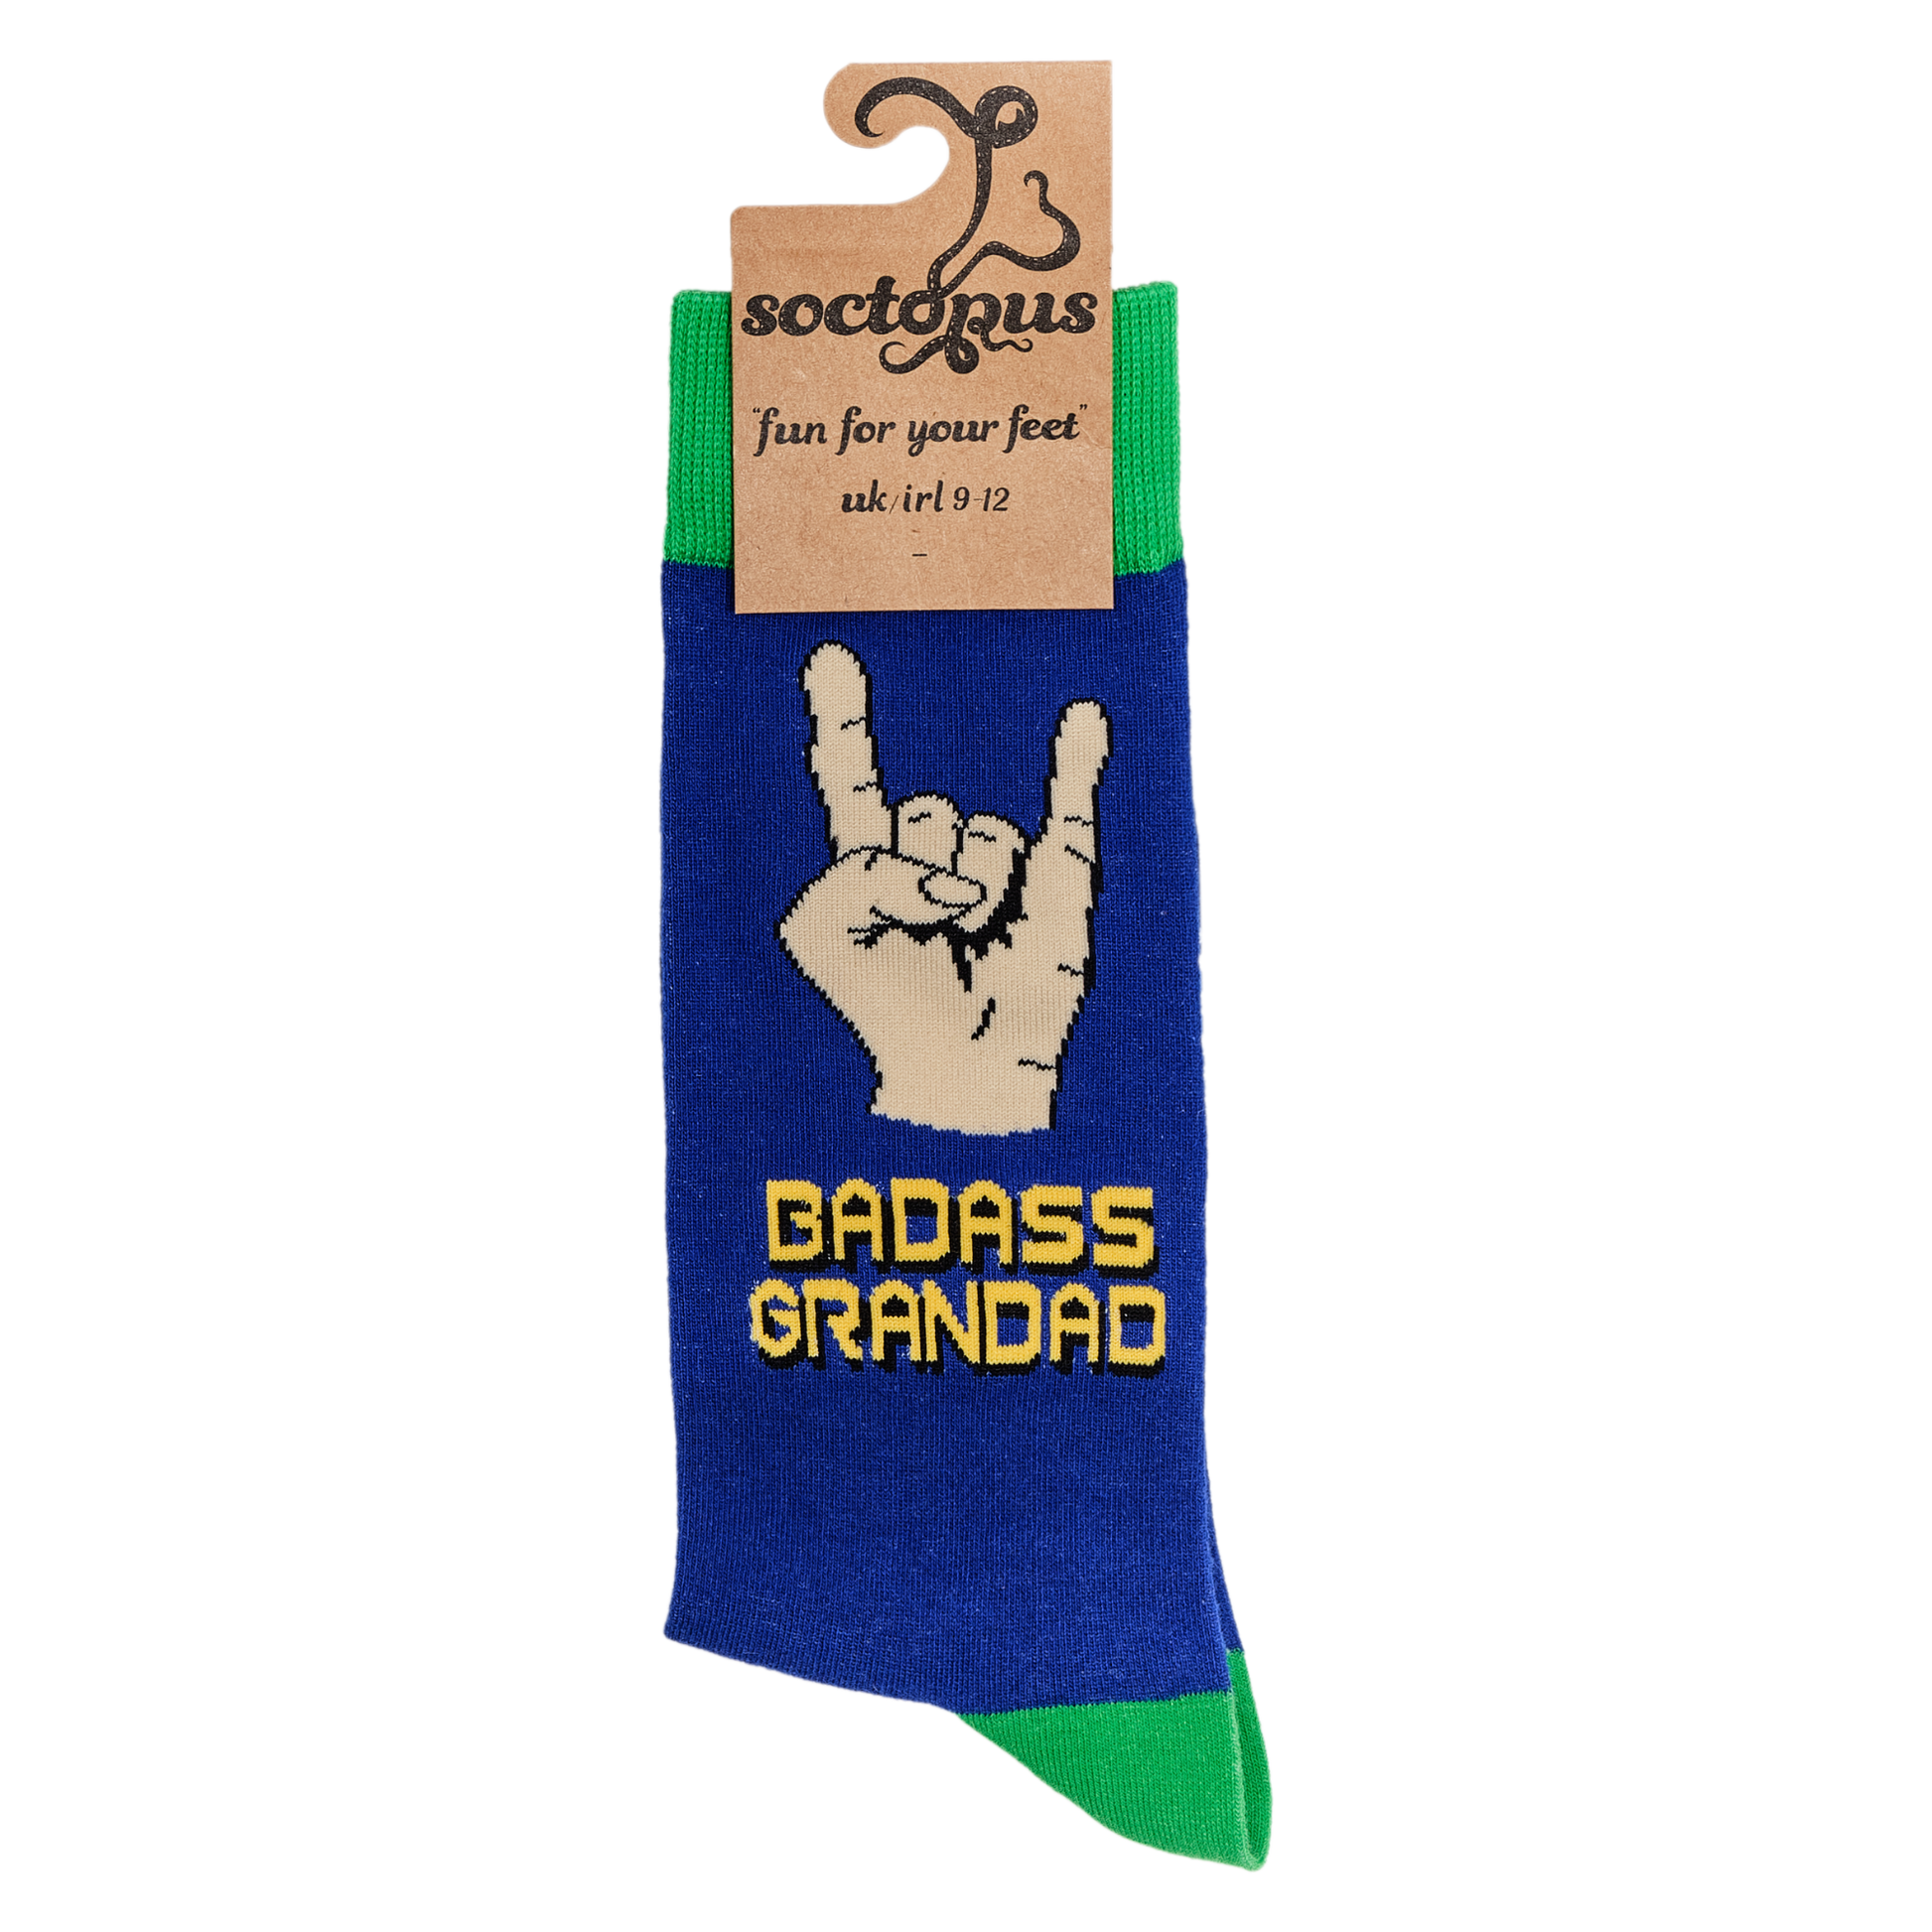 A pair of socks depicting metal horns that say 'Badass Grandad. Blue legs, green cuff, heel and toe. In packaging.